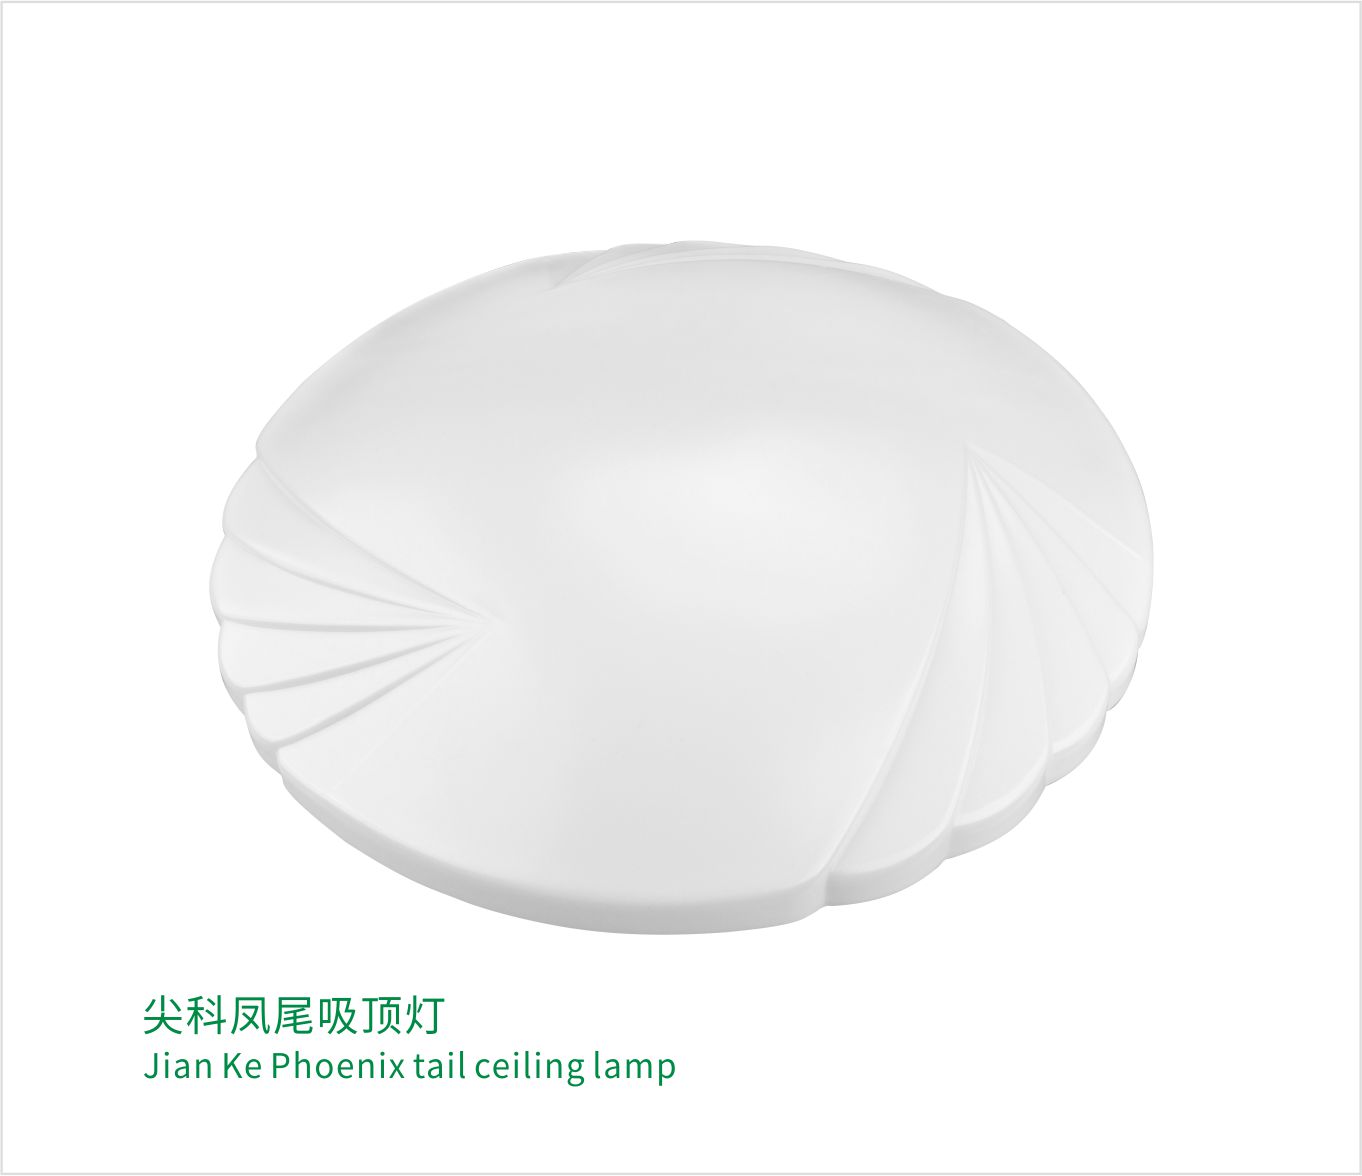 Phoenix tail ceiling lamp